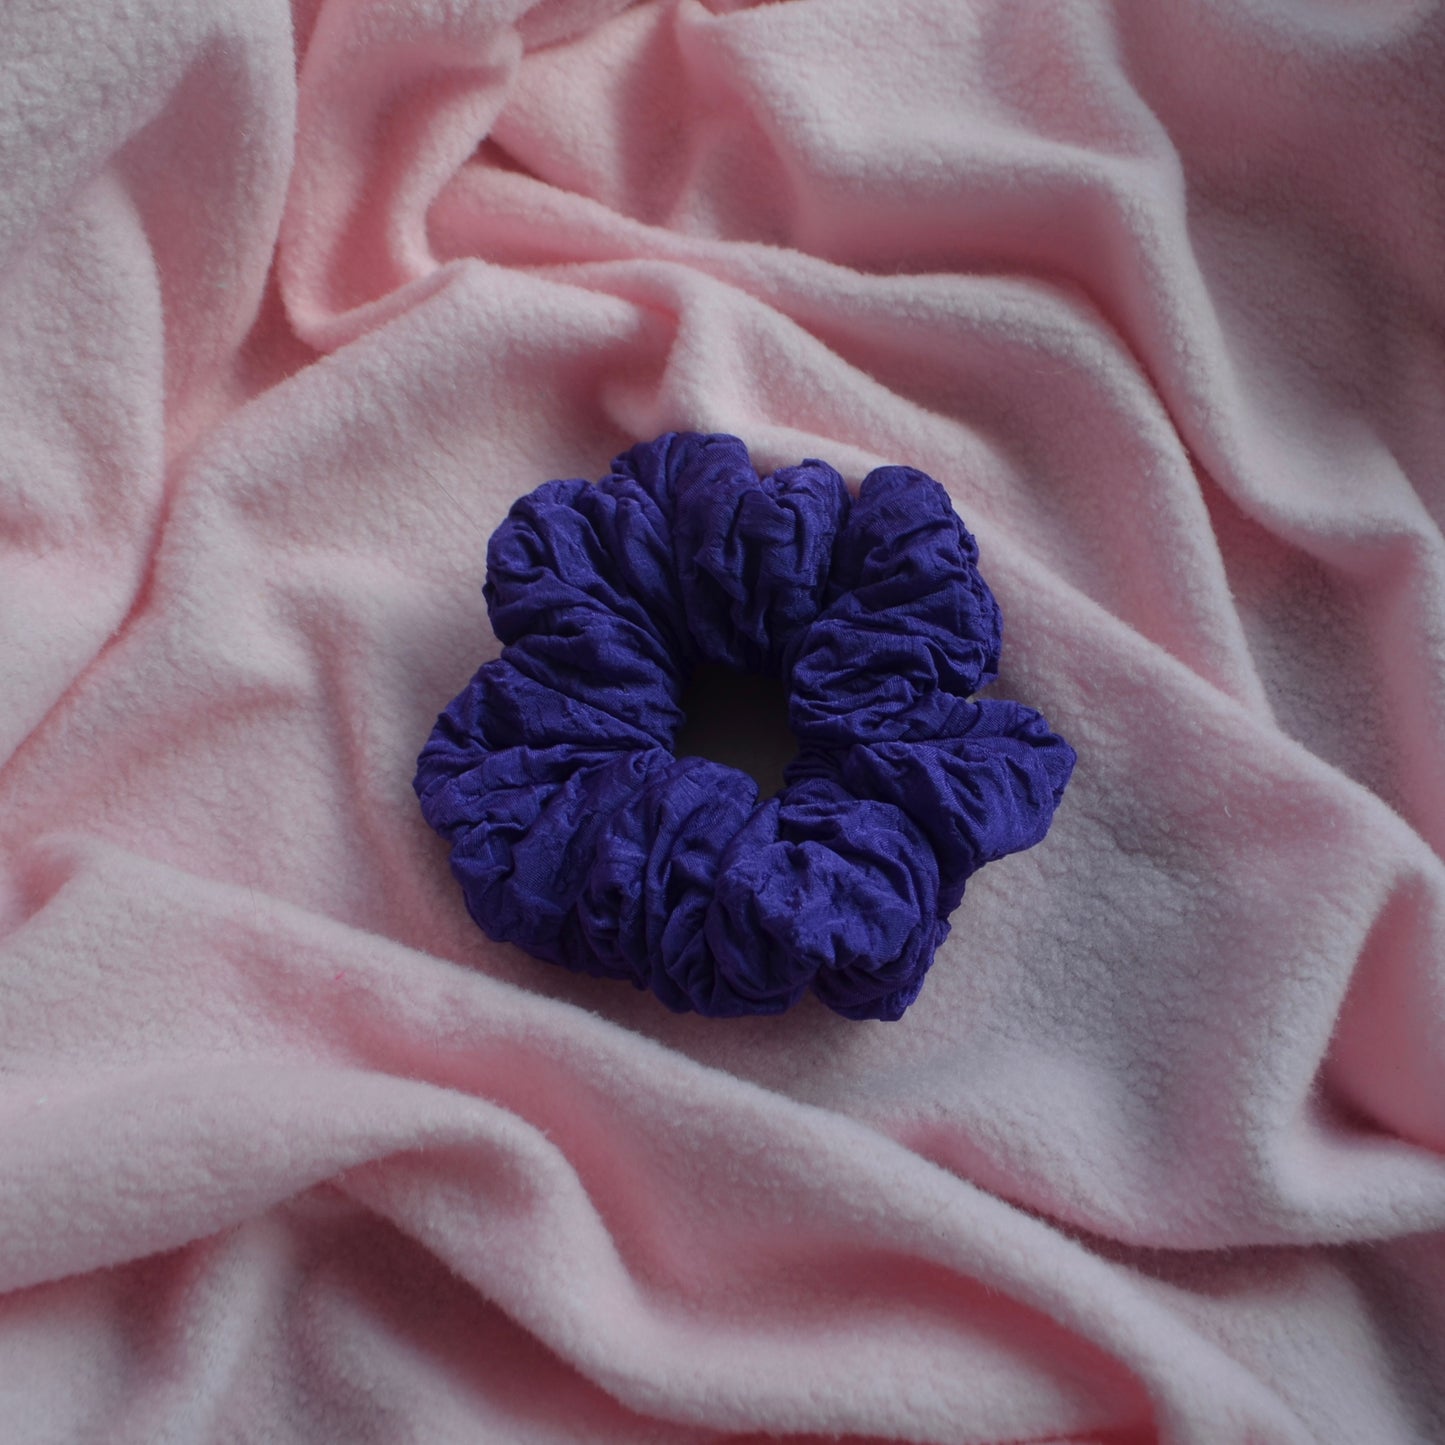 Smushy Purple Large Scrunchie